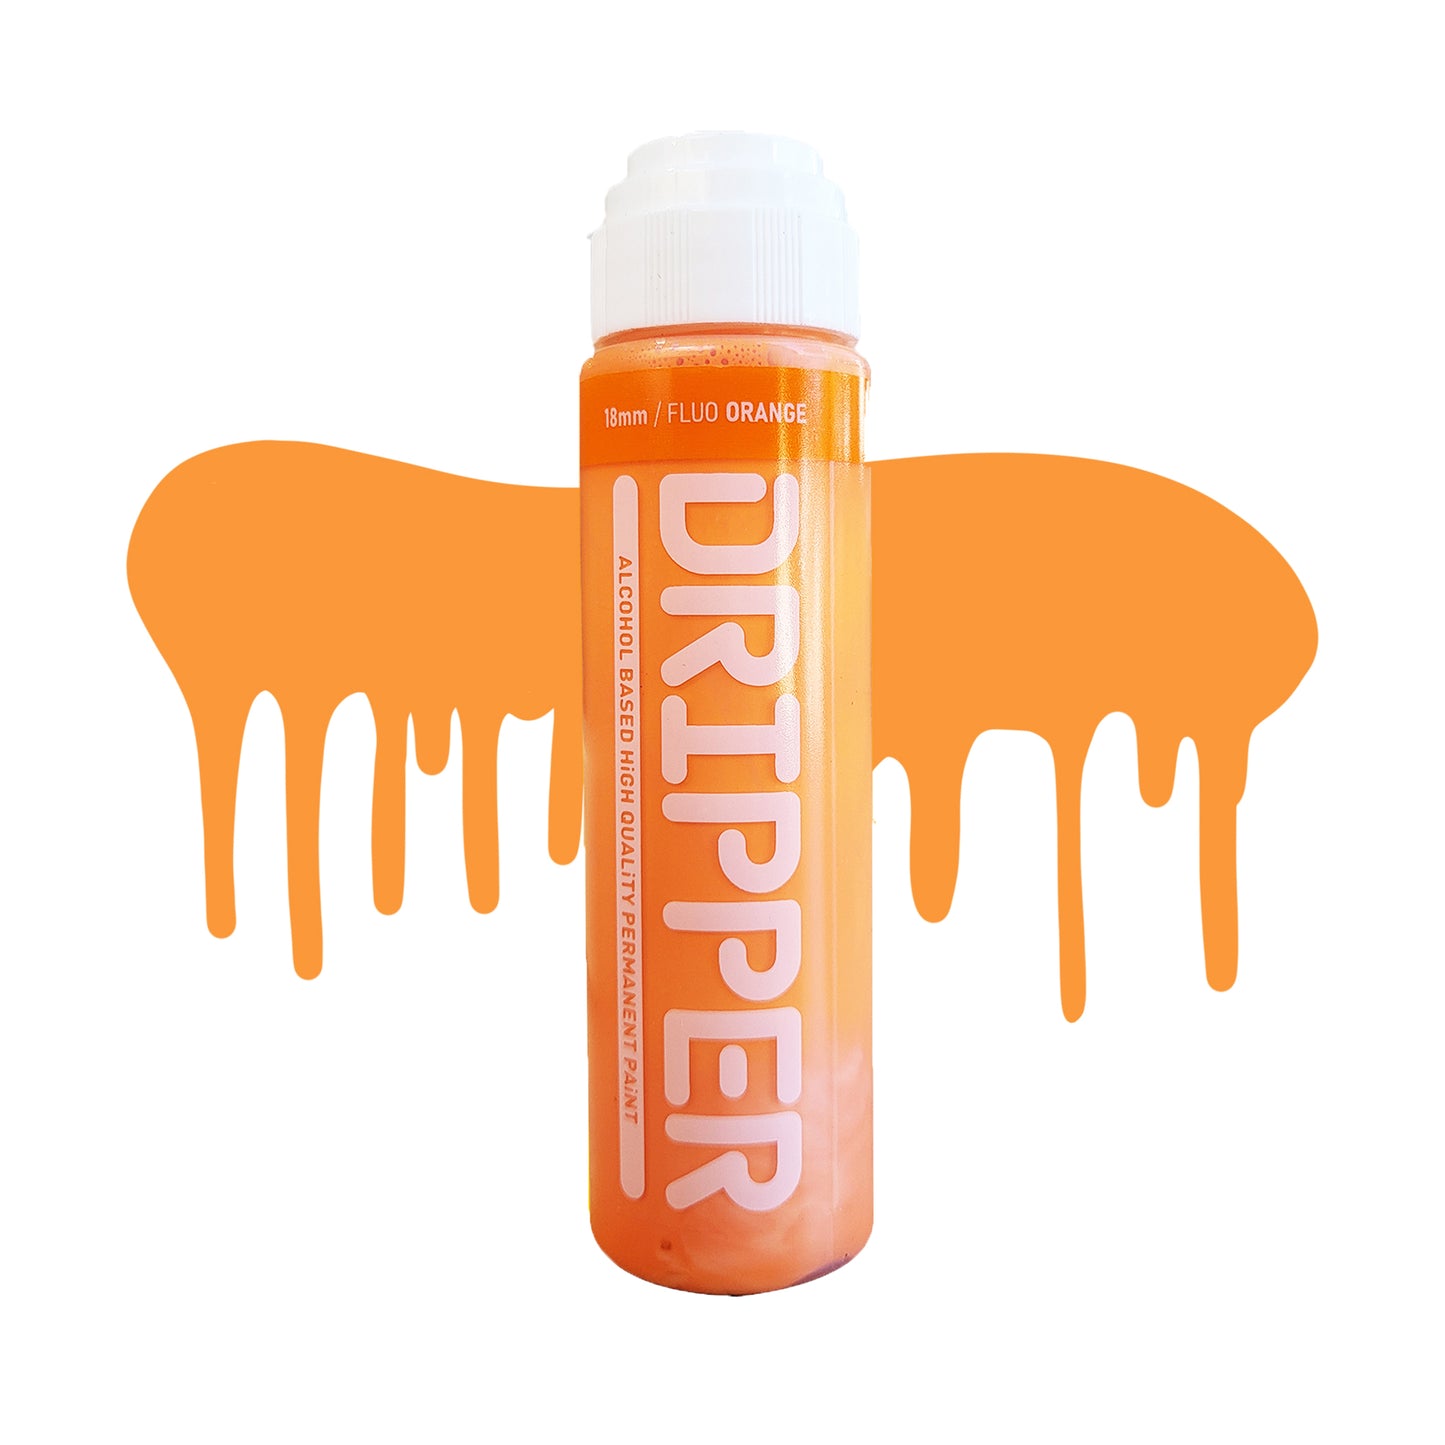 Dope Paint, Graffiti Squeeze Dripper Mop Marker in fluorescent orange.